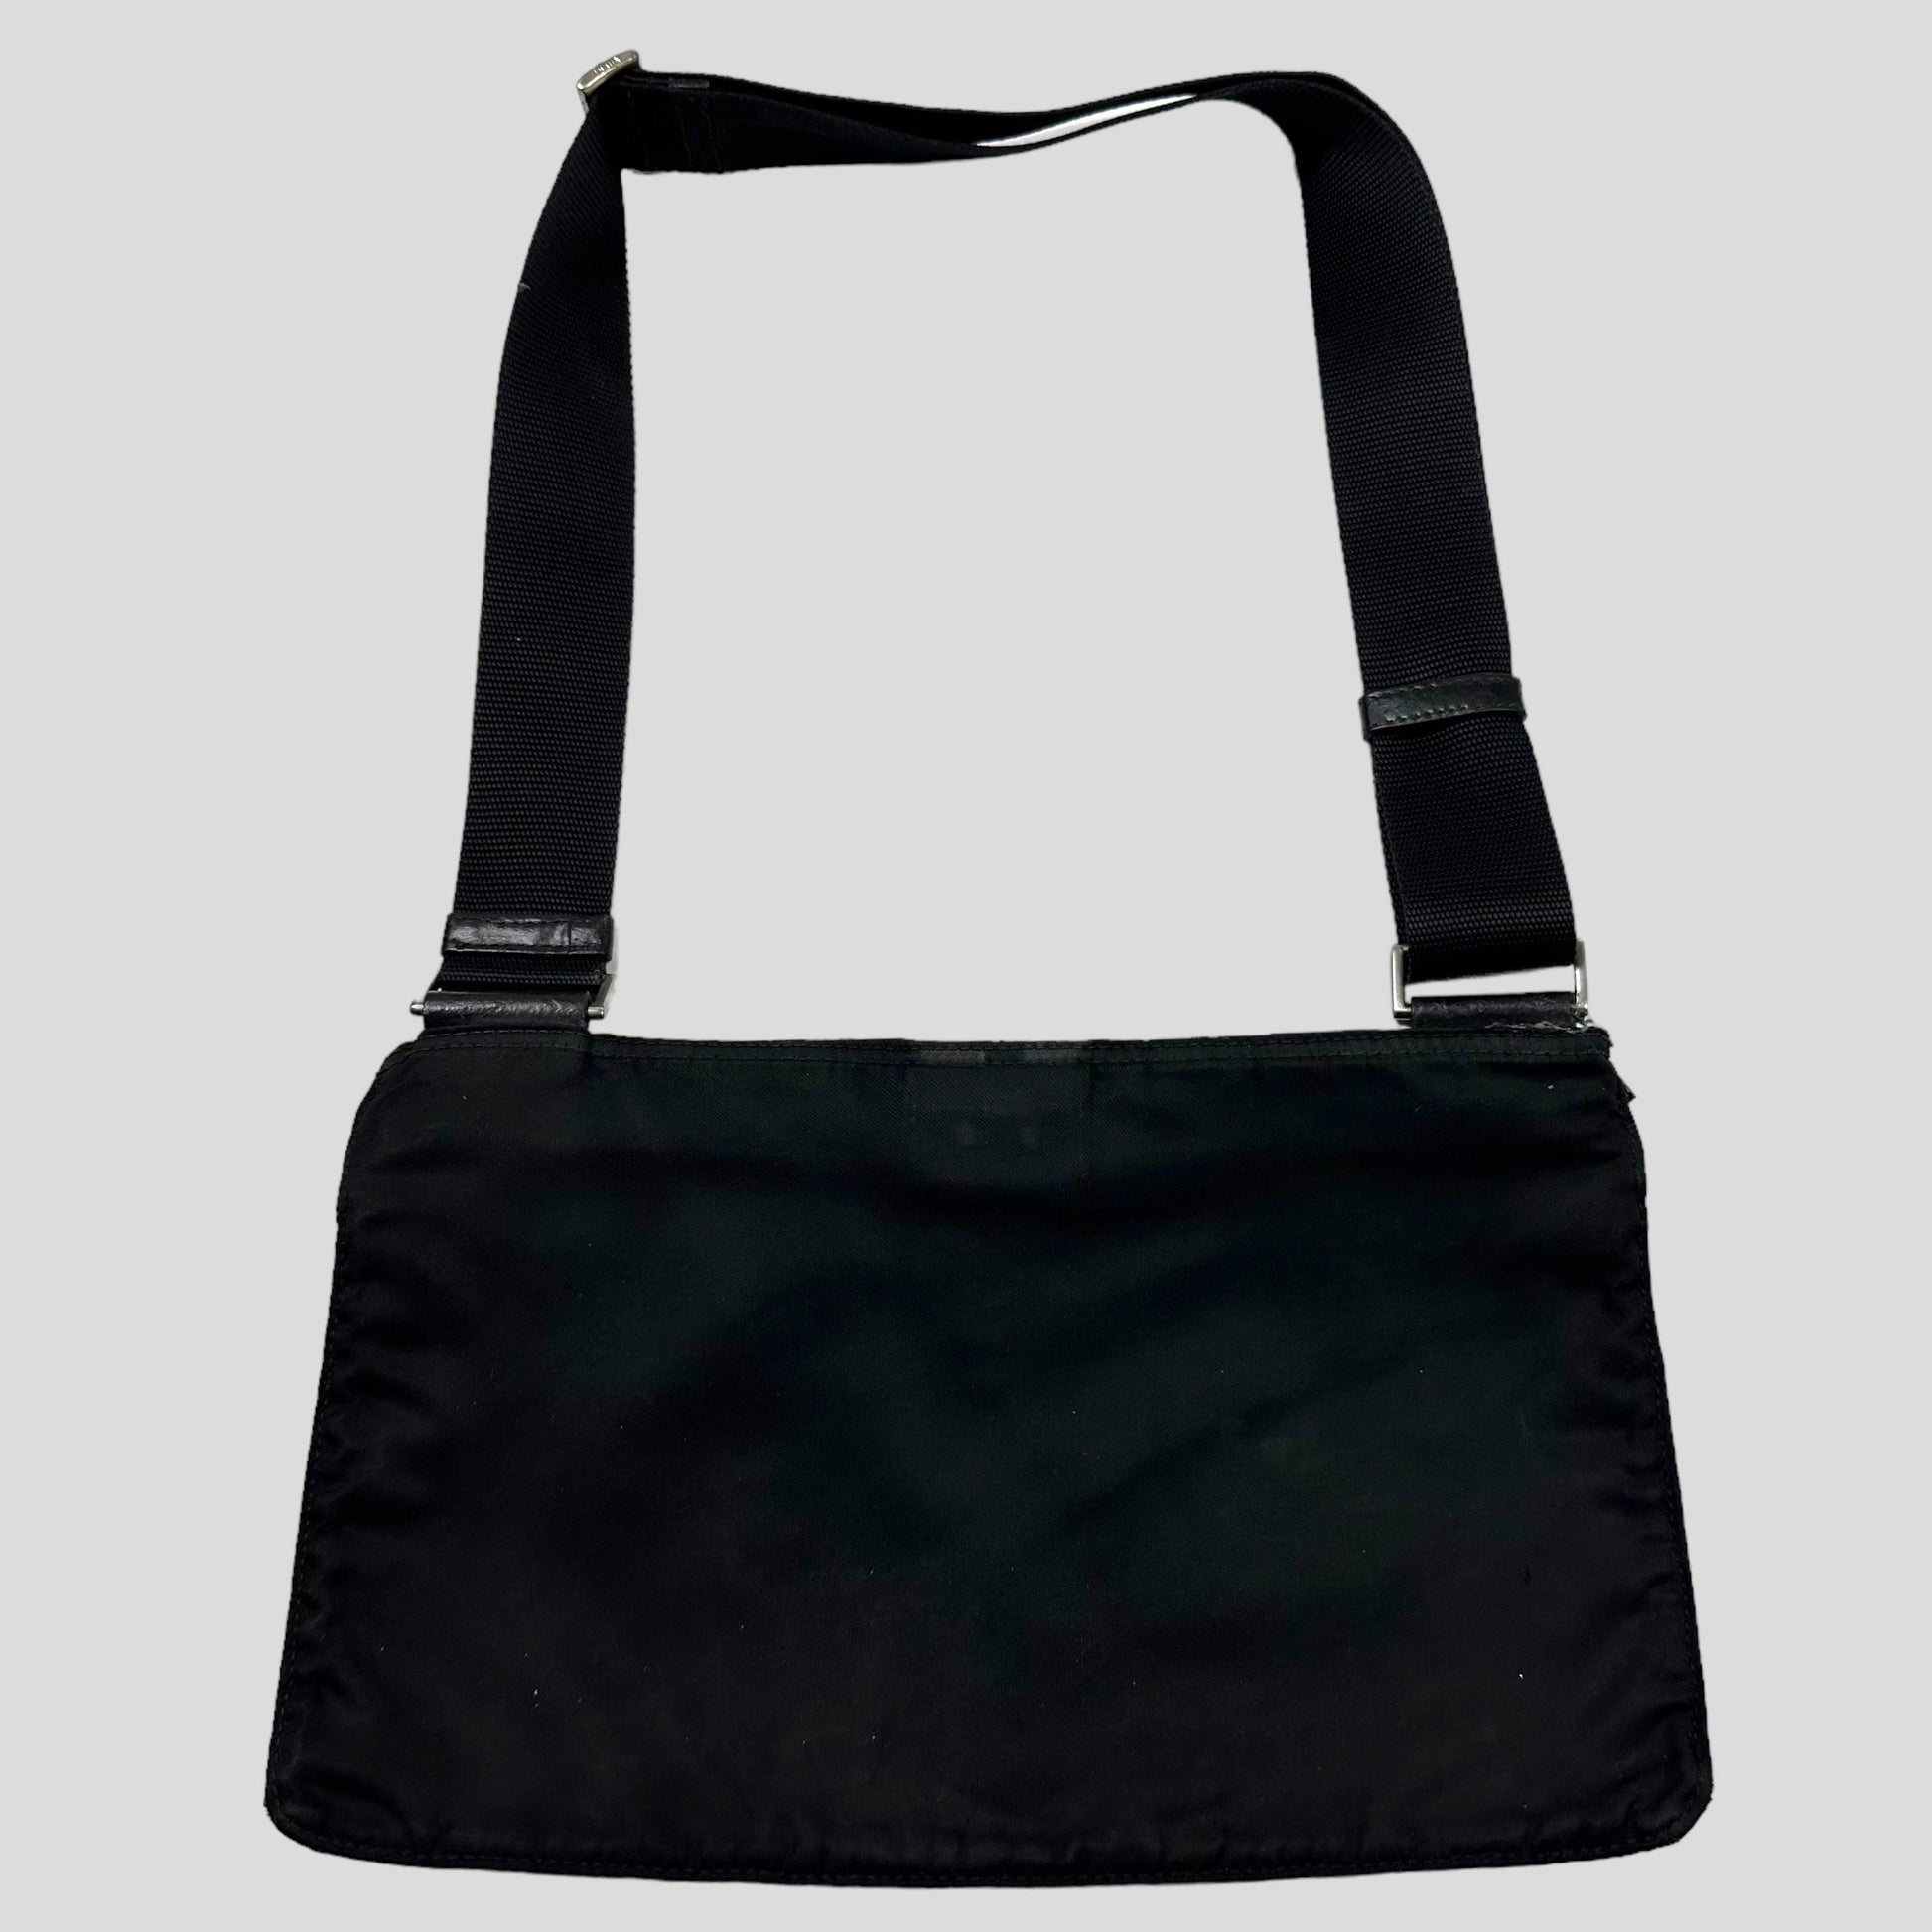 Prada Milano 00’s Nylon Rectangle Crossbody Bag - Known Source